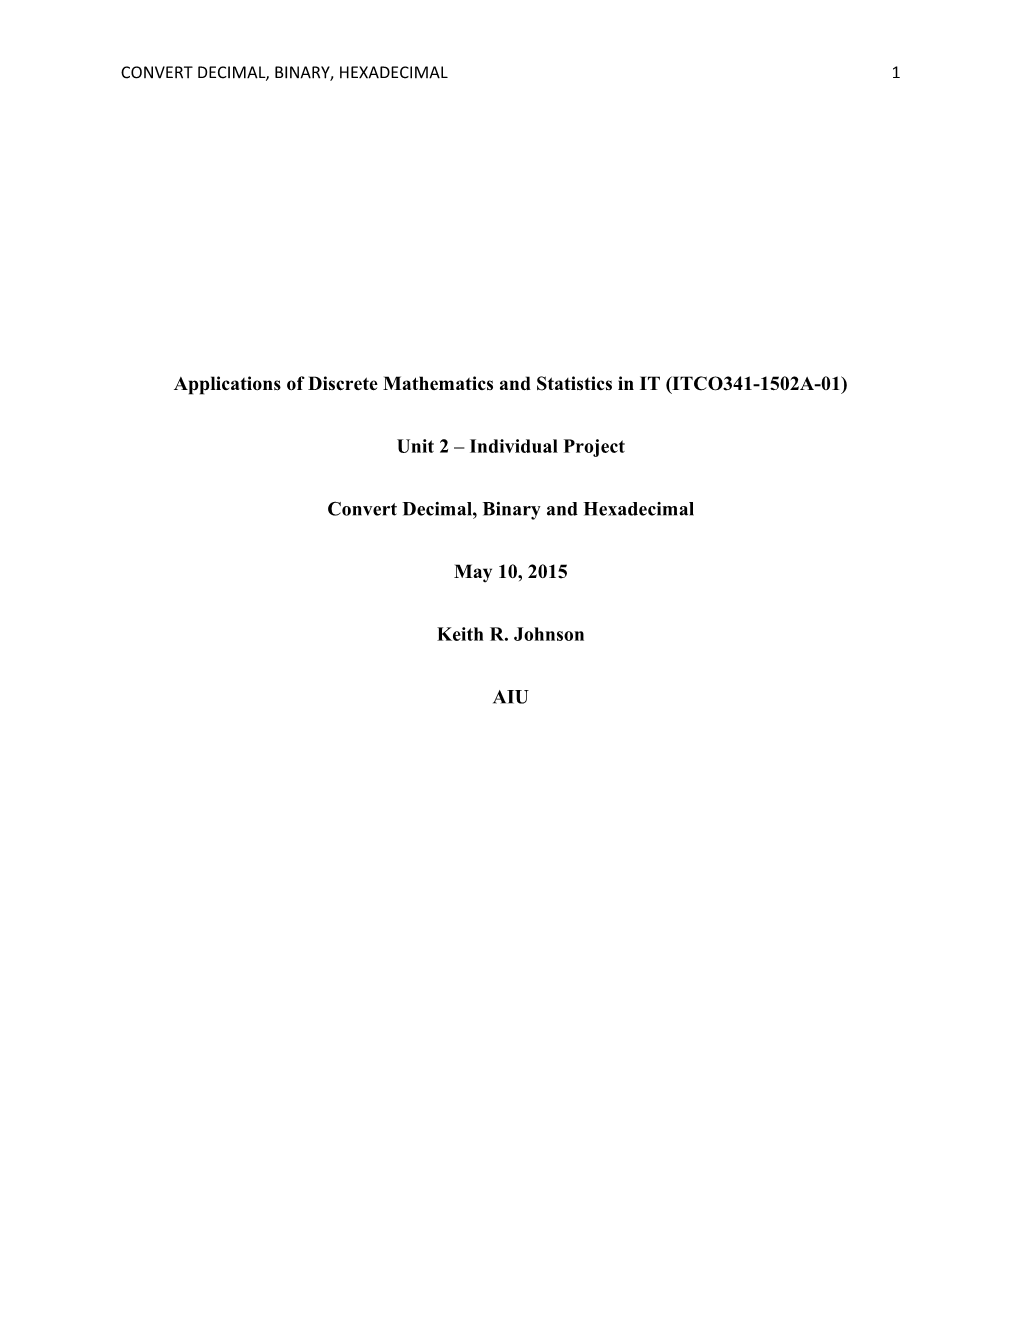 Applications of Discrete Mathematics and Statistics in IT (ITCO341-1502A-01)